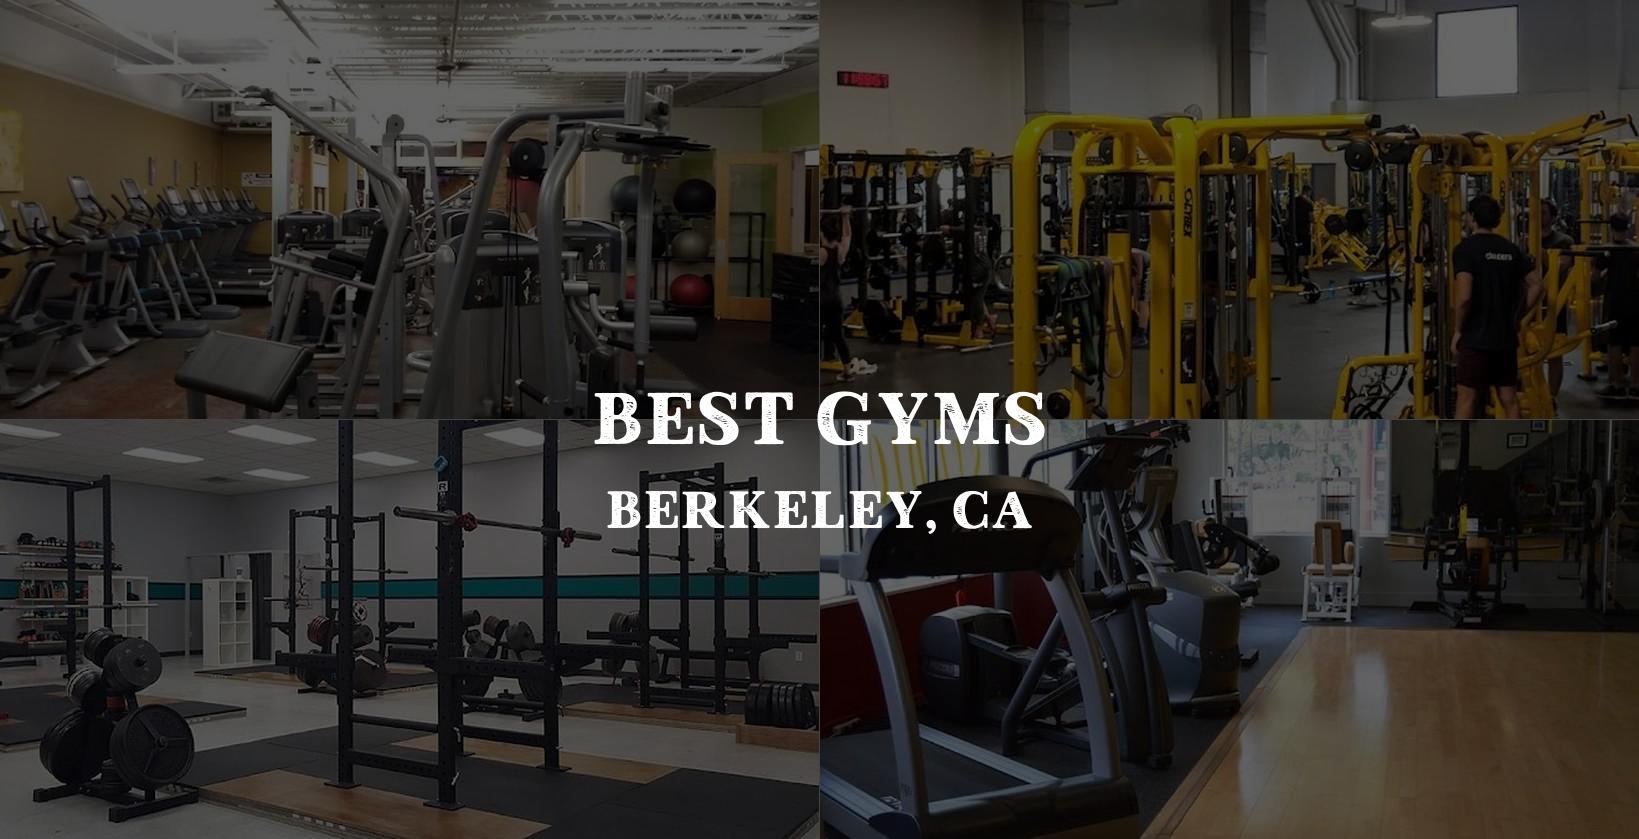 Choosing the right gym in Berkeley